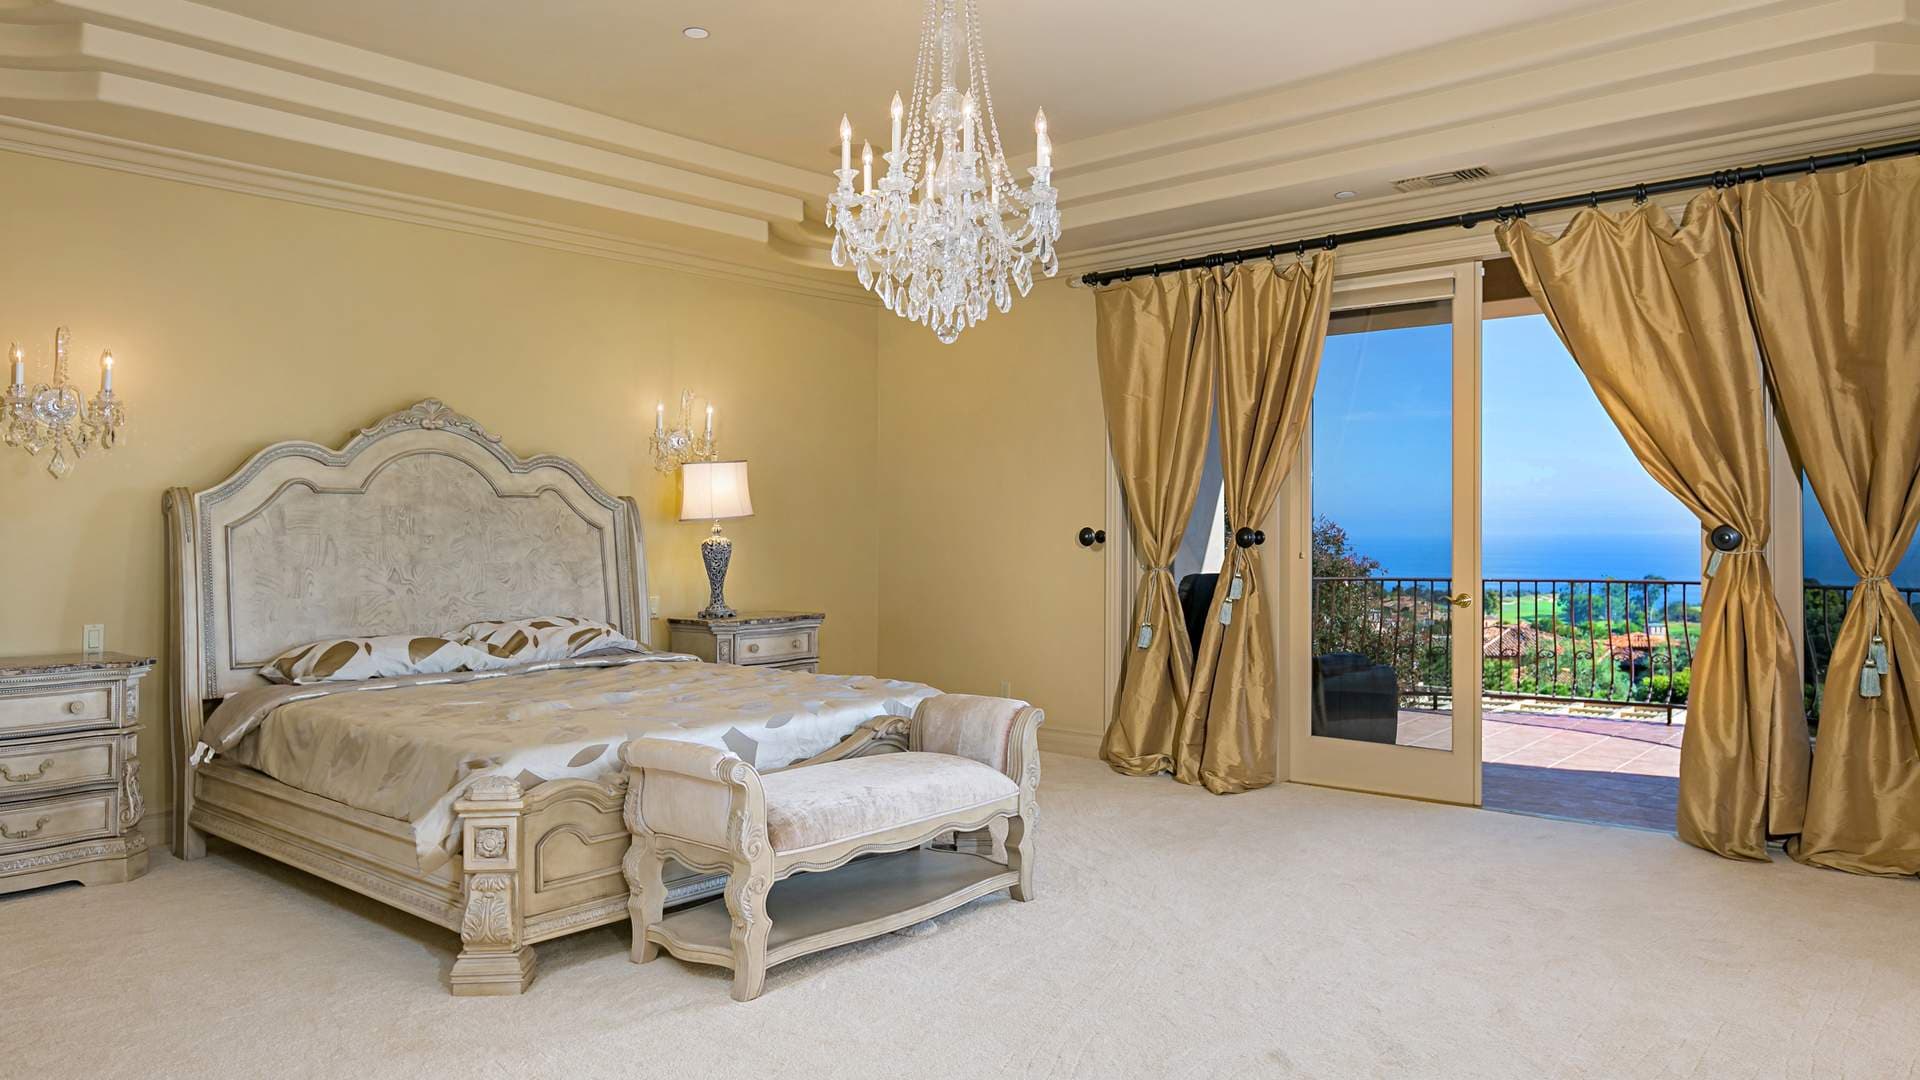 5 Bedroom Villa For Sale Newport Beach Lp01276 24a6a8d54474d800.jpg